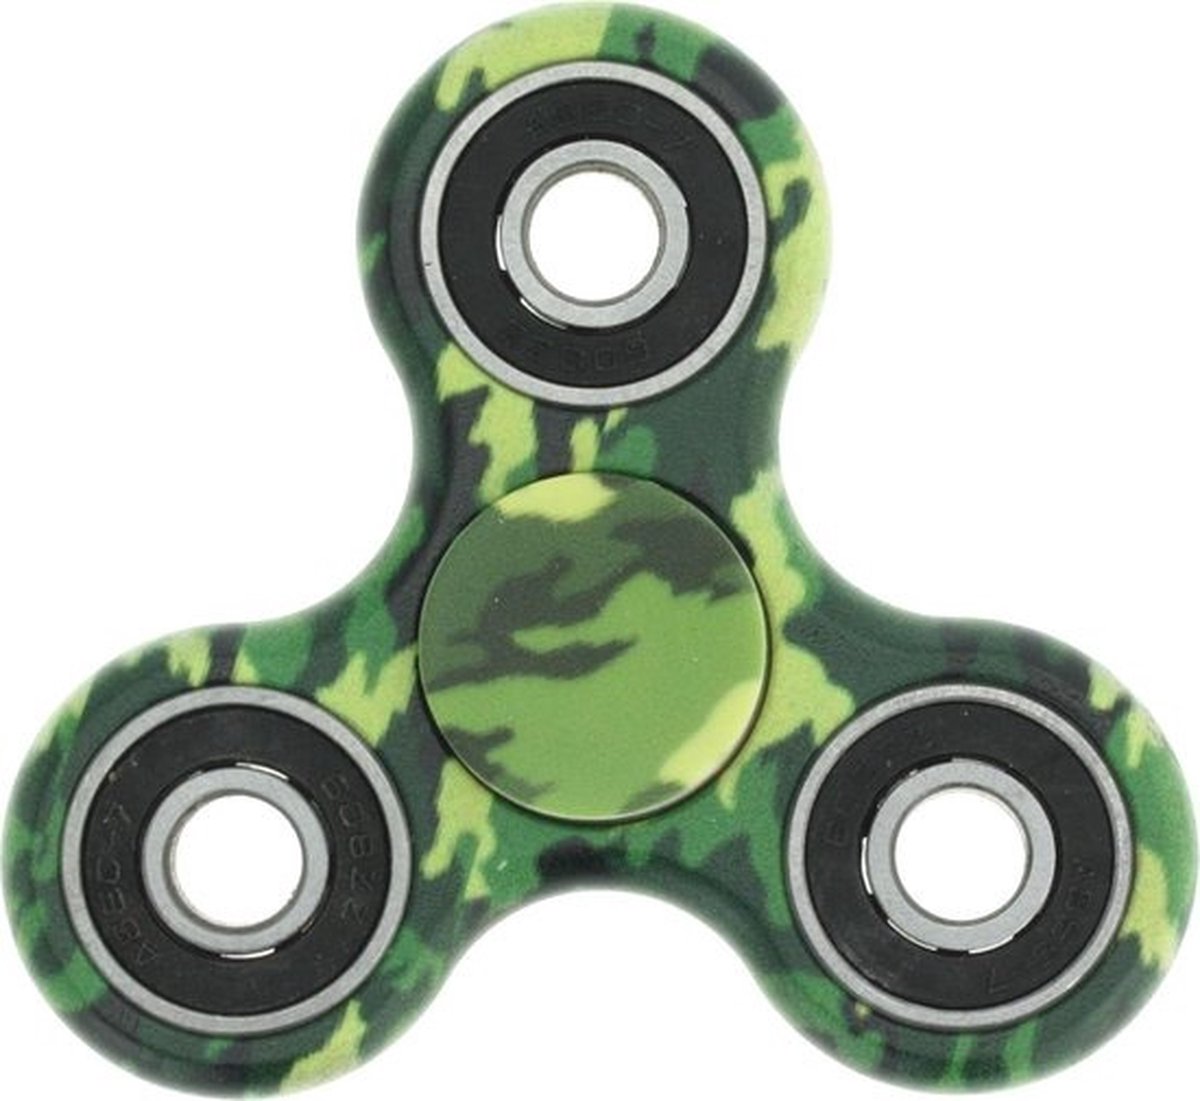 Fidget spinner Green Camo - Langdurige spin - Hoogwaardig merk Hand spinner - Uniek design!